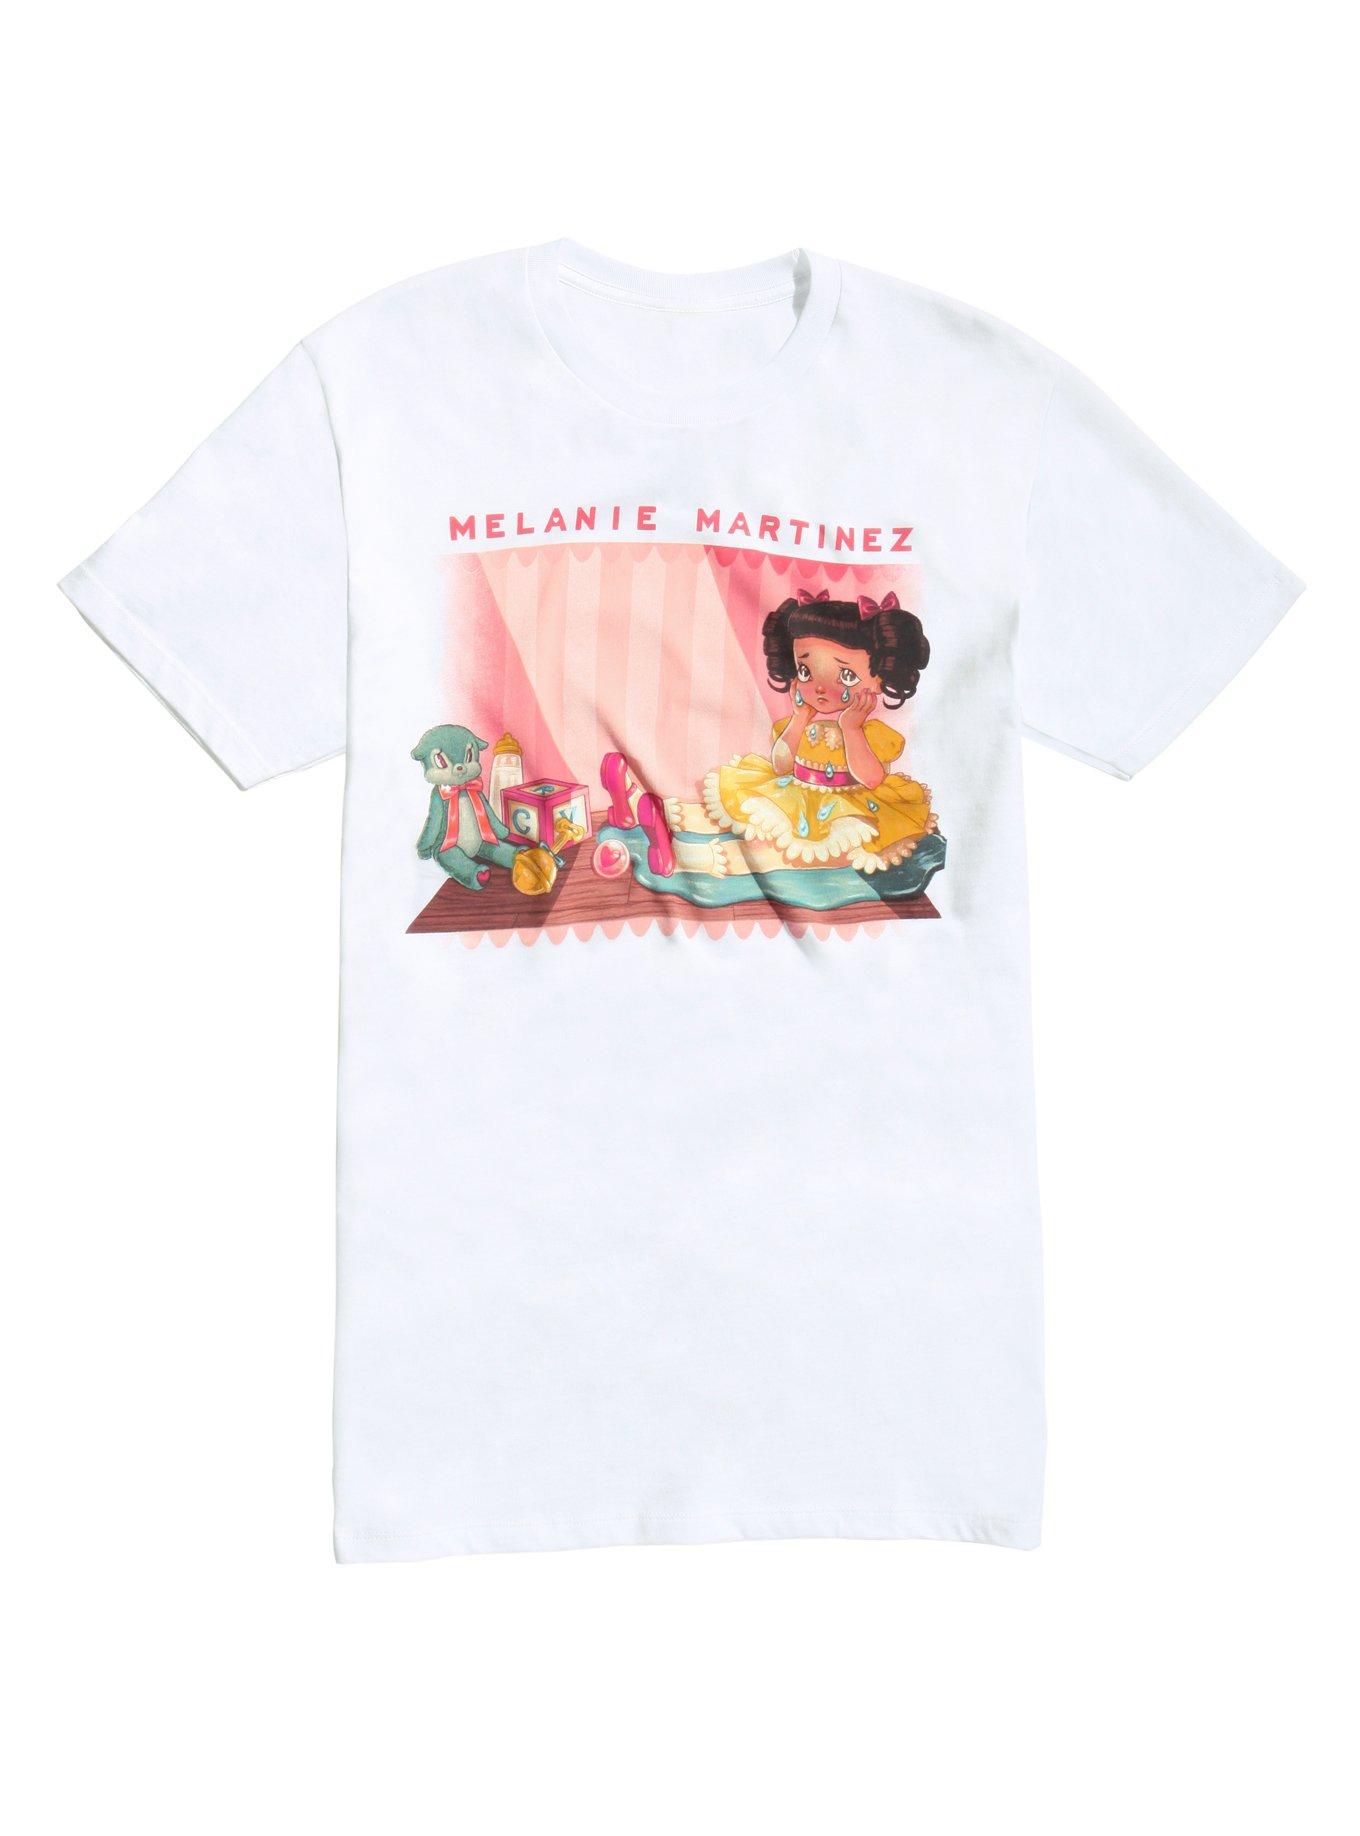 Melanie Martinez Cry Baby Doll T-Shirt | Hot Topic